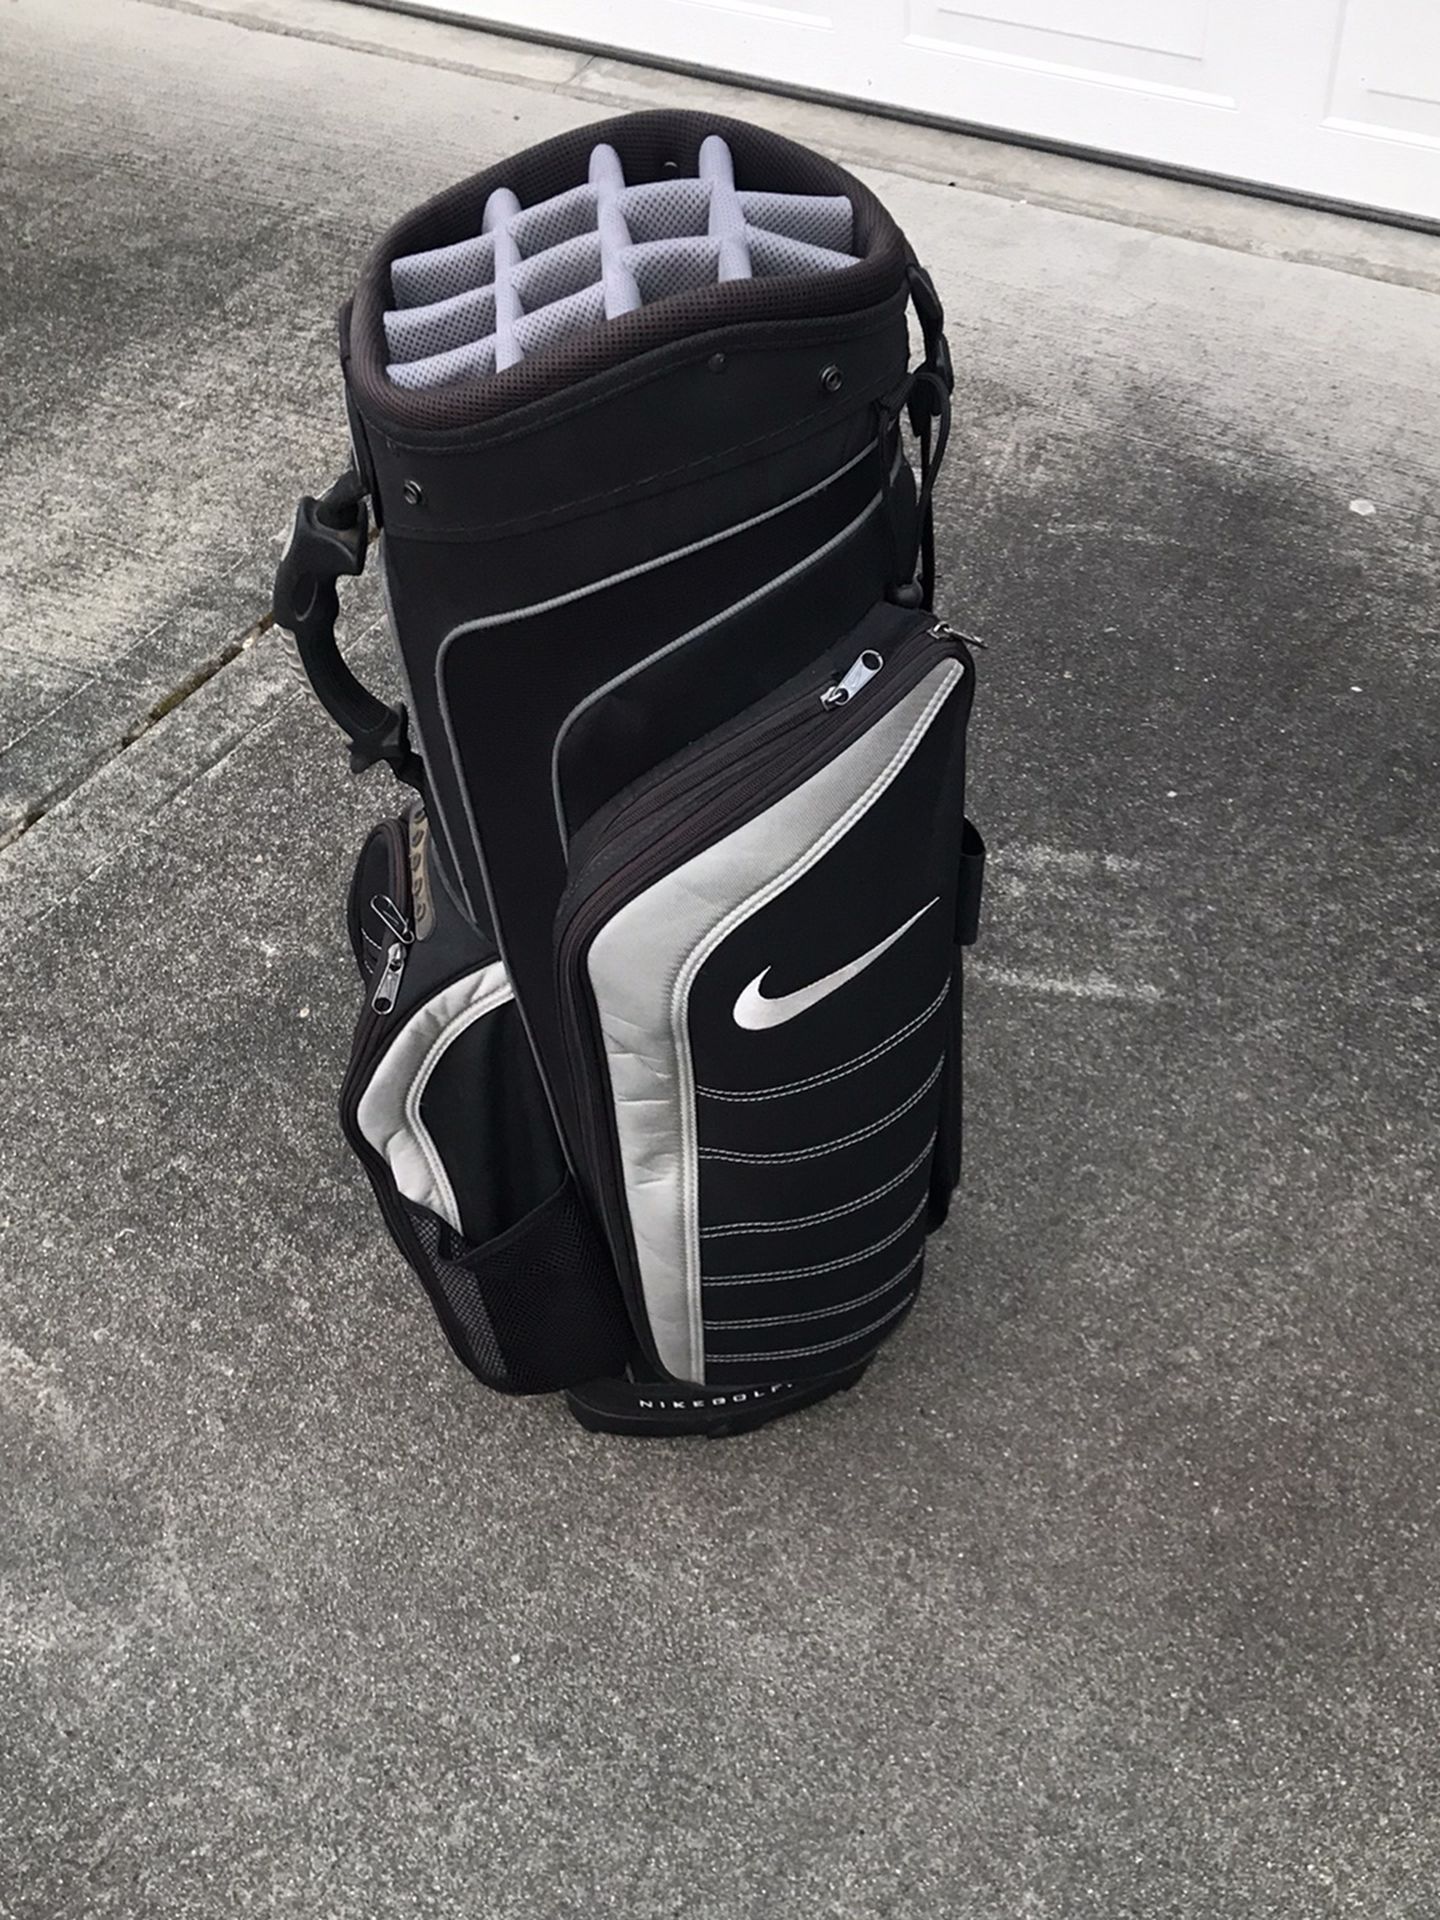 Nike Cart Bag Golf Black And Grey Good Shape